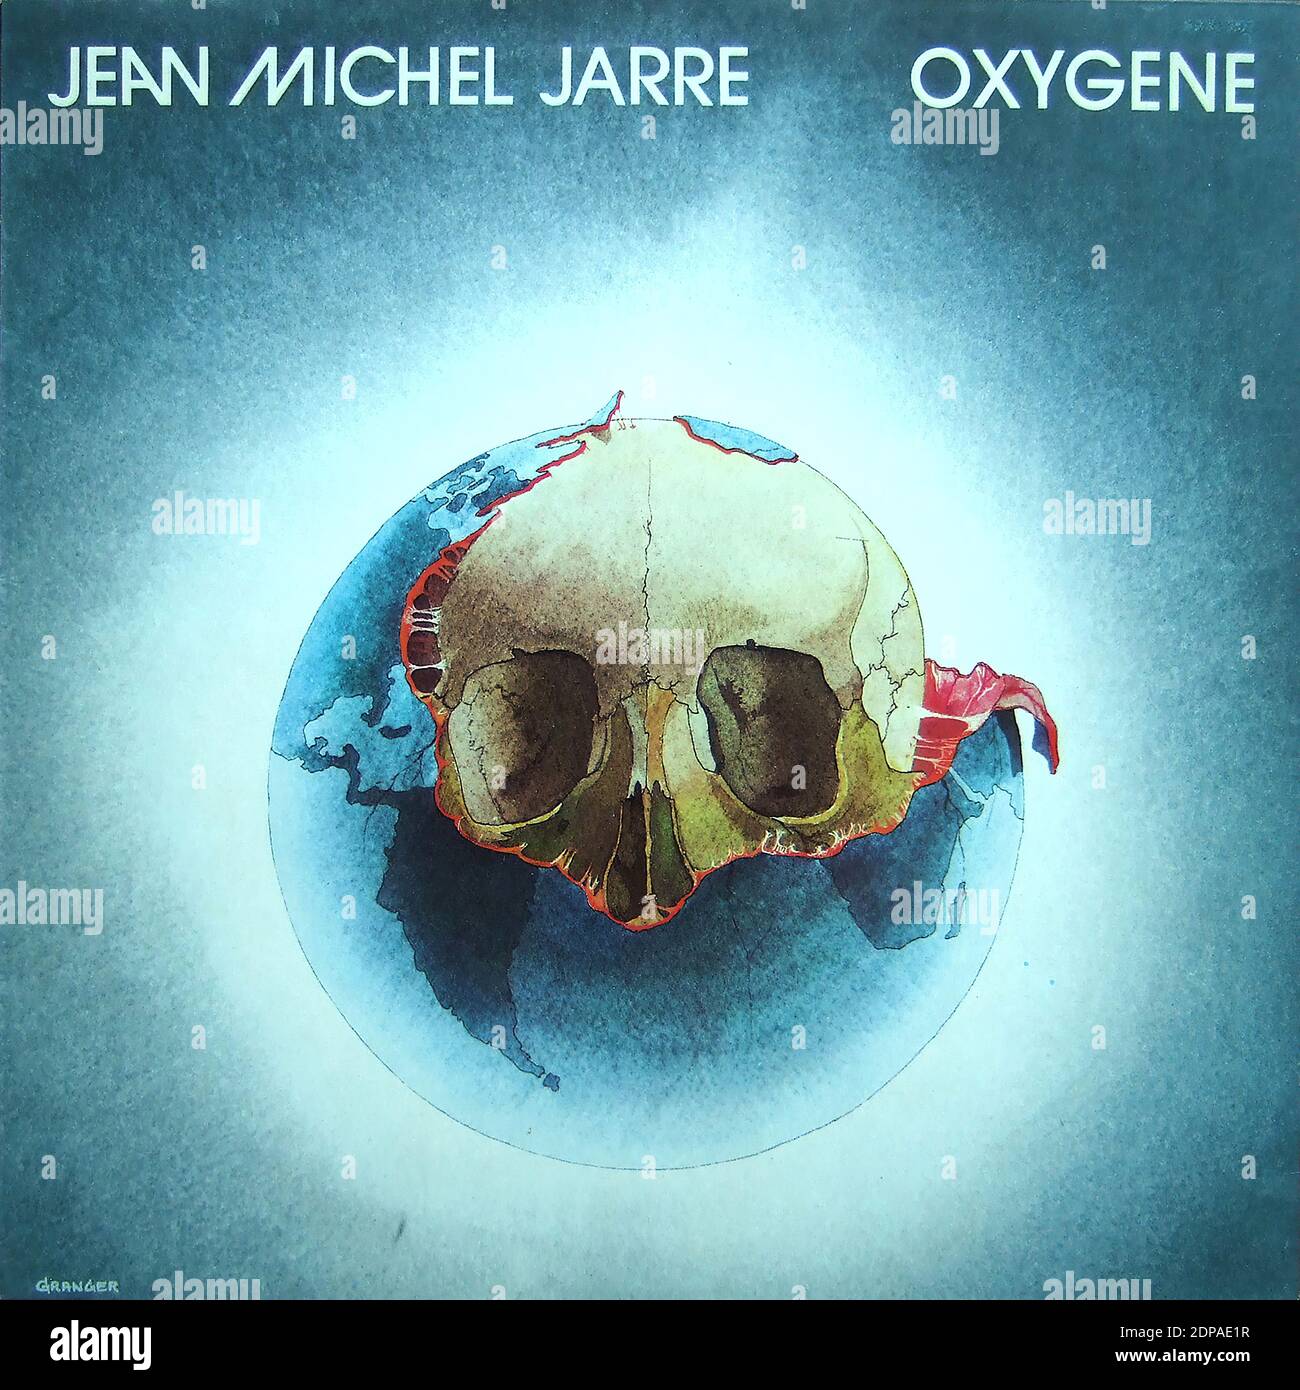 Jean-Michel Jarre - Oxygene - Vintage vinyl album cover Stock Photo - Alamy